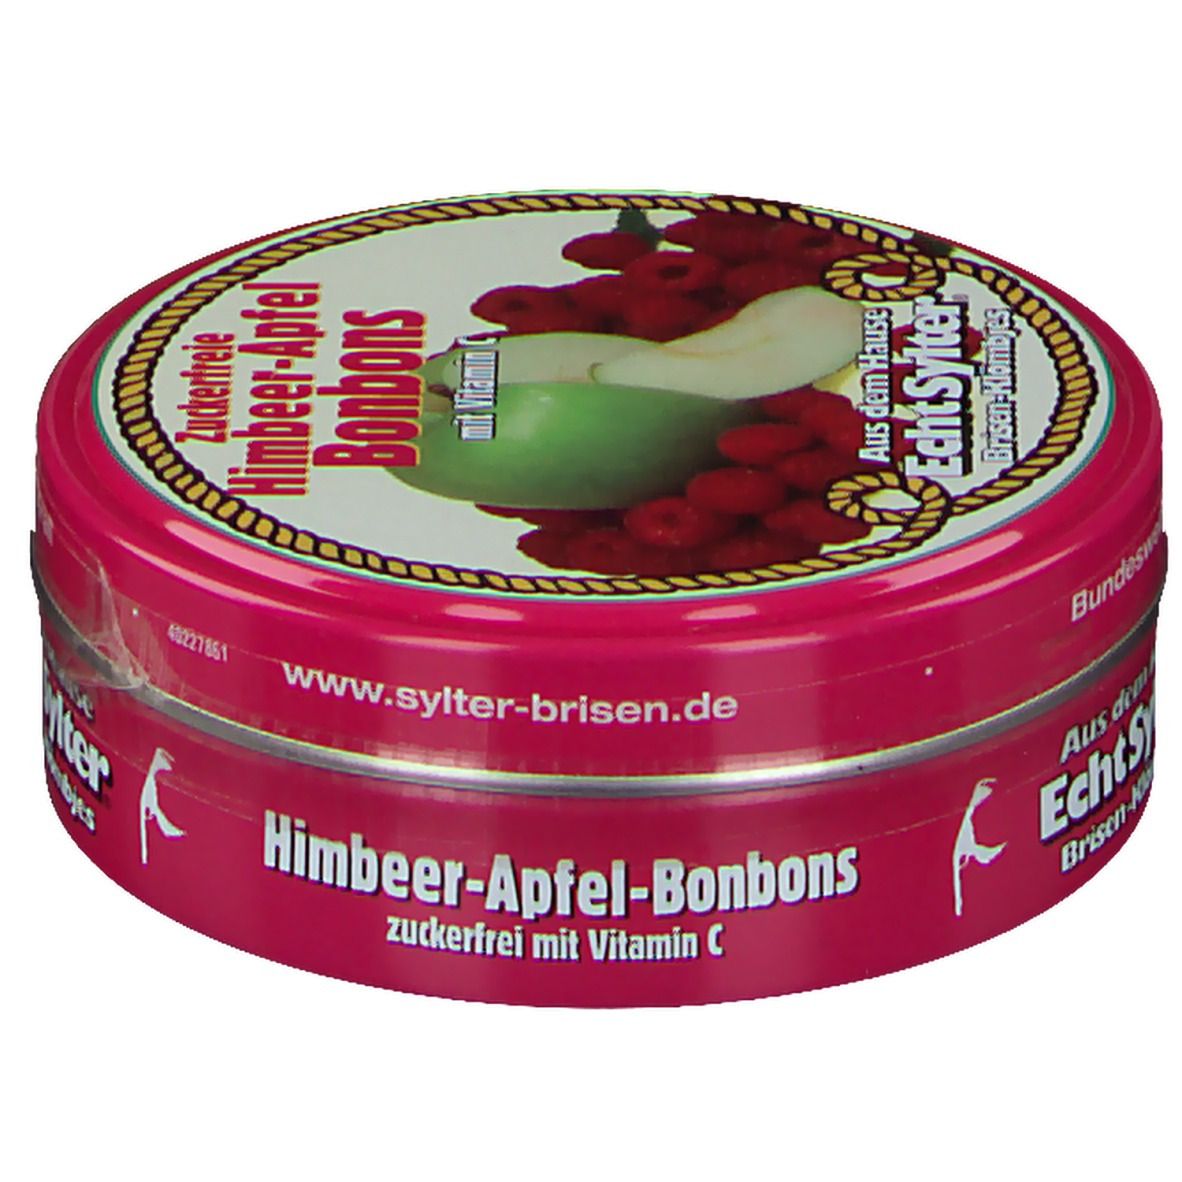 Echt Sylter Bonbons Himbeer-Apfel zuckerfrei